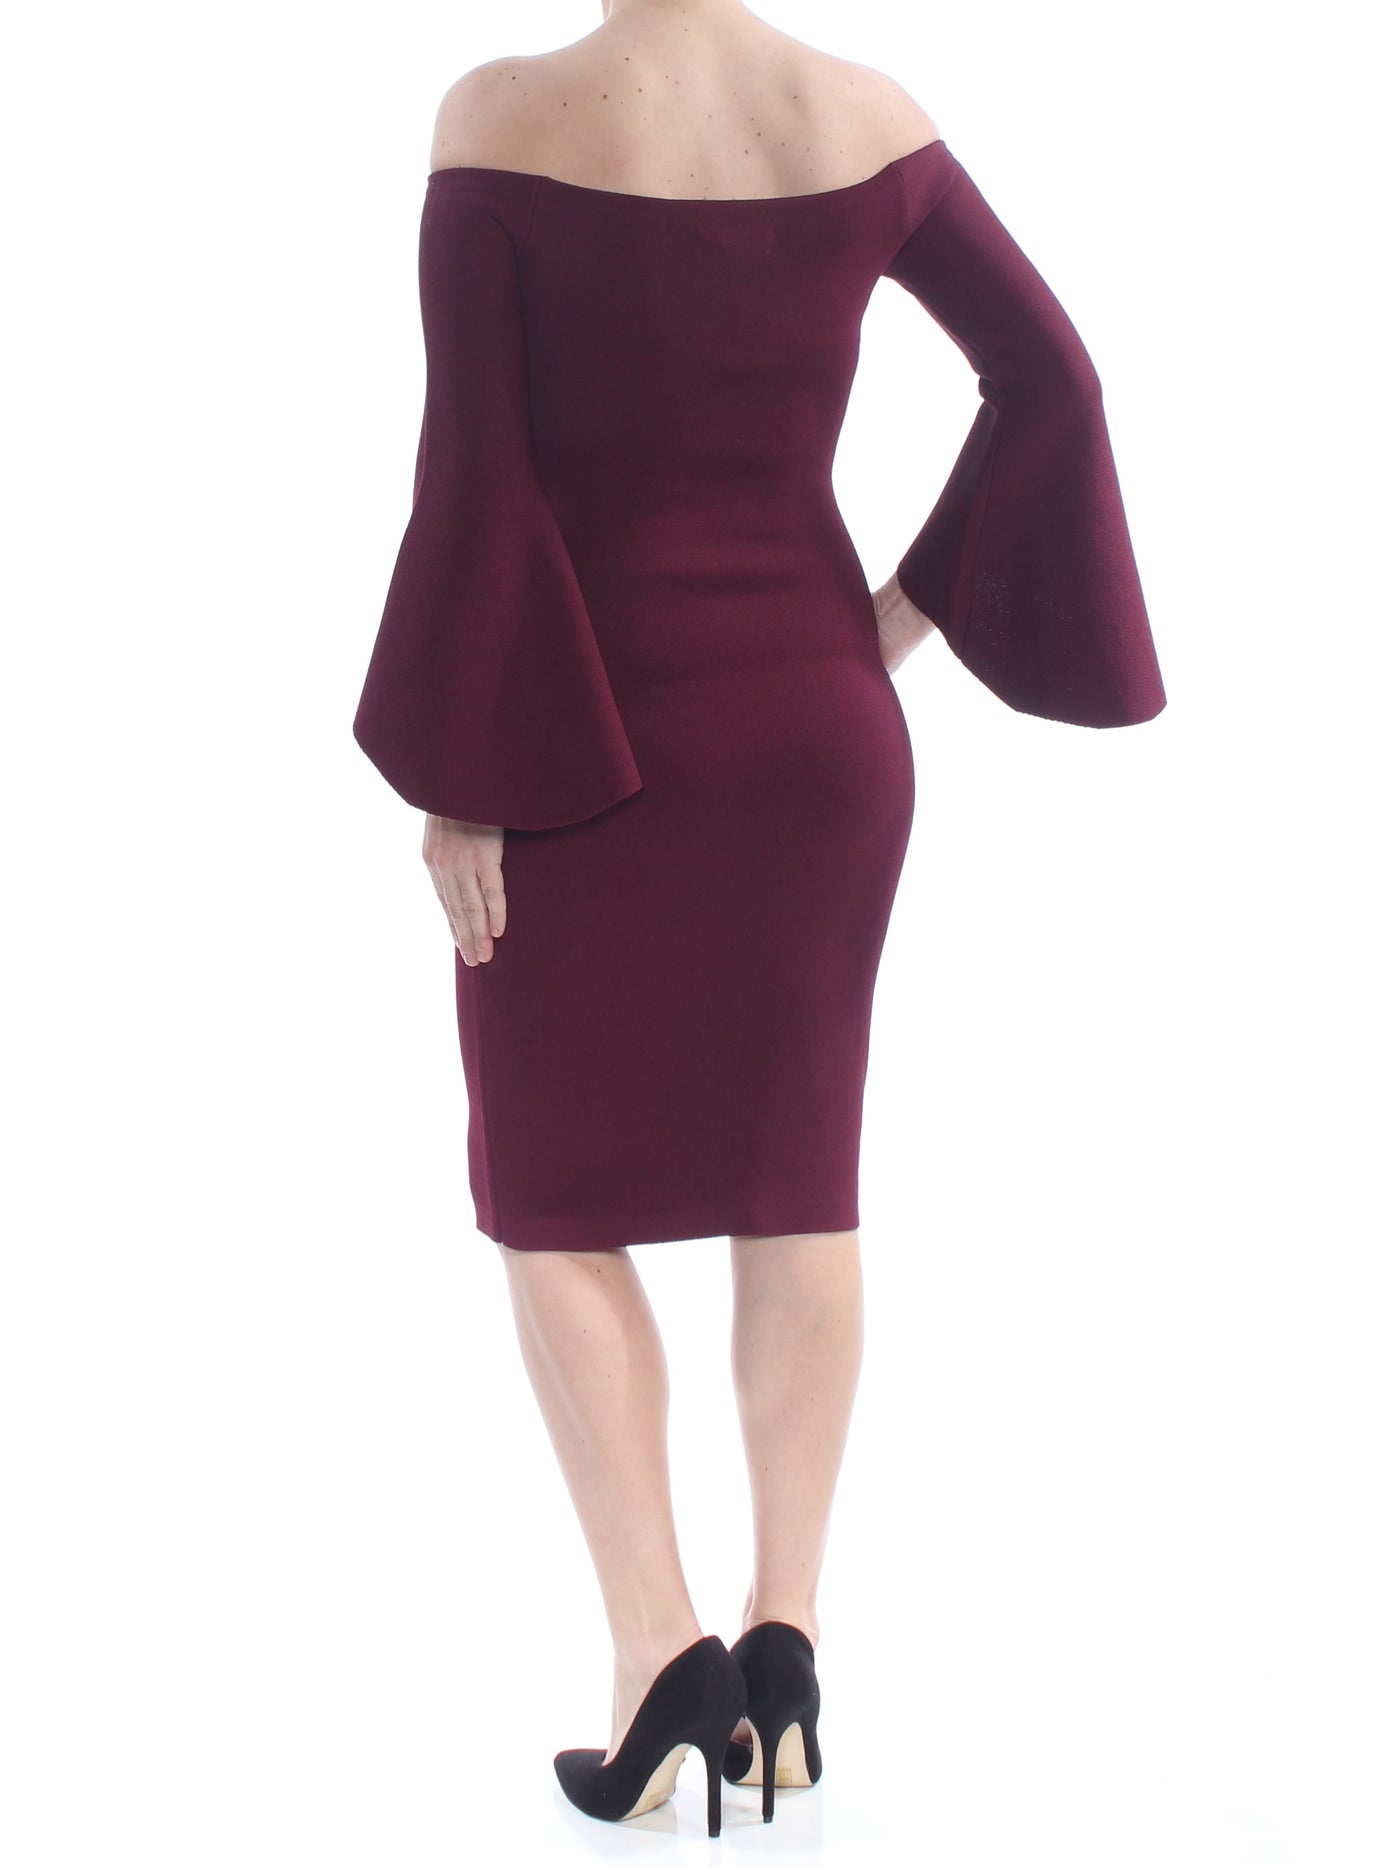 RACHEL ROY Womens Maroon Long Sleeve Off Shoulder Knee Length Formal Sheath Dress